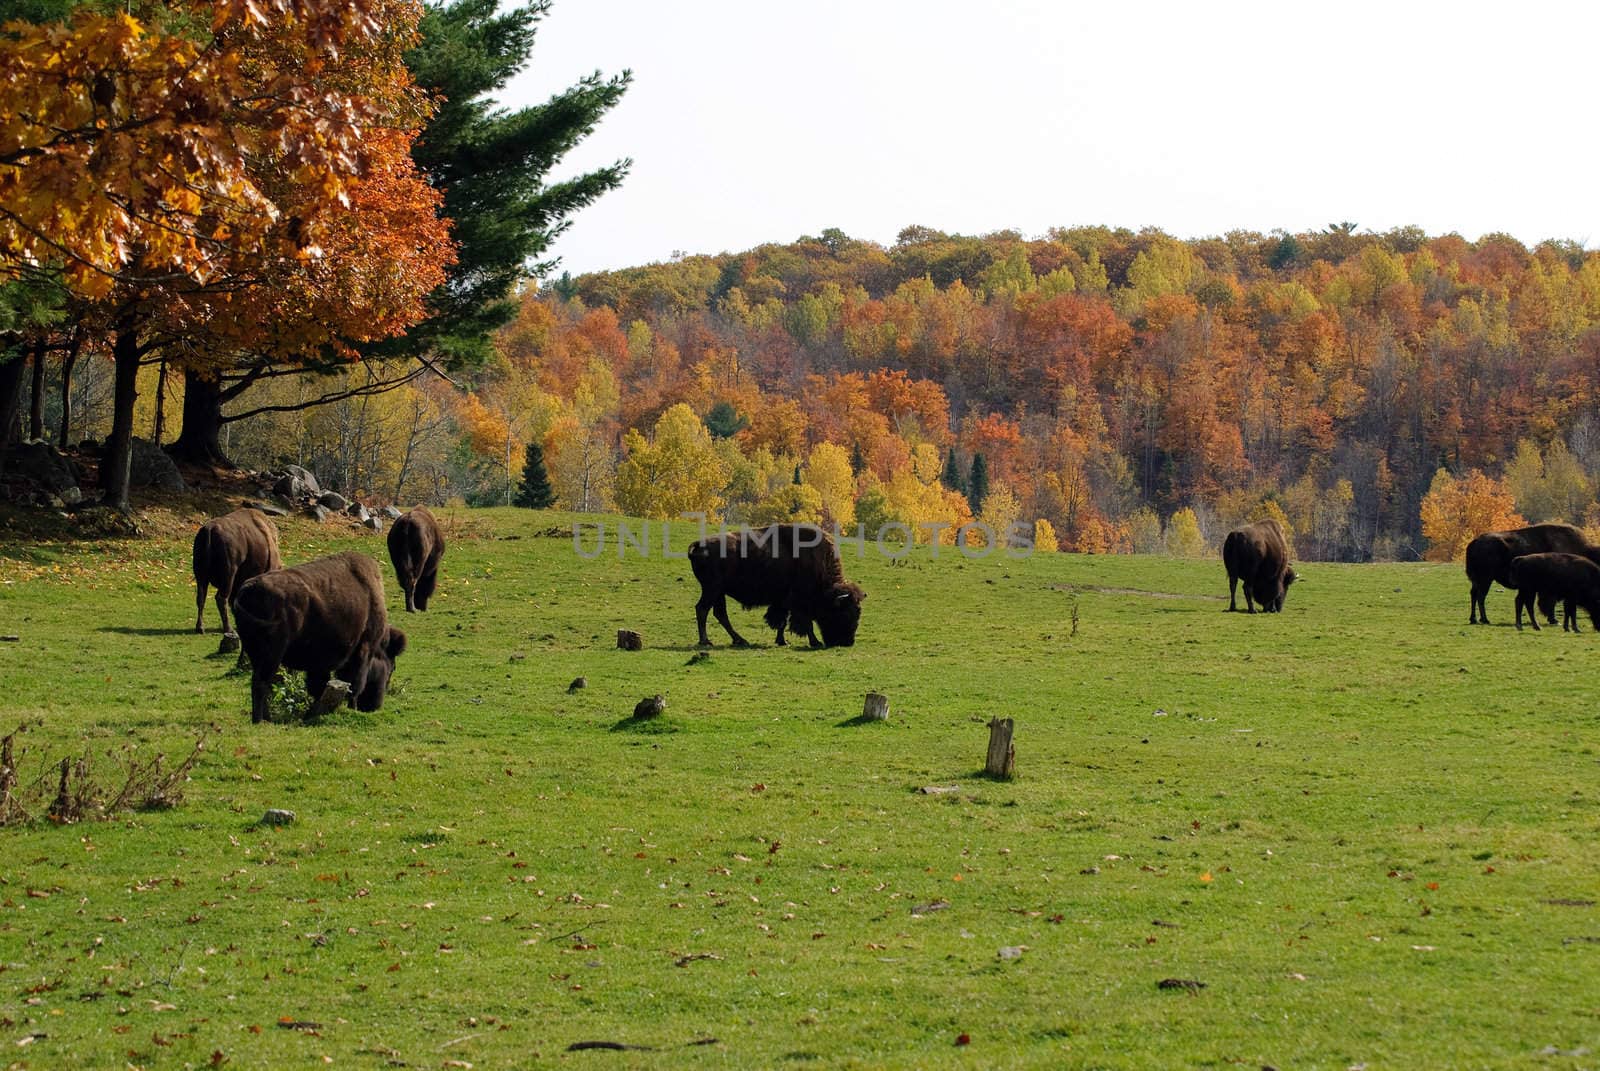 Bison herd by nialat